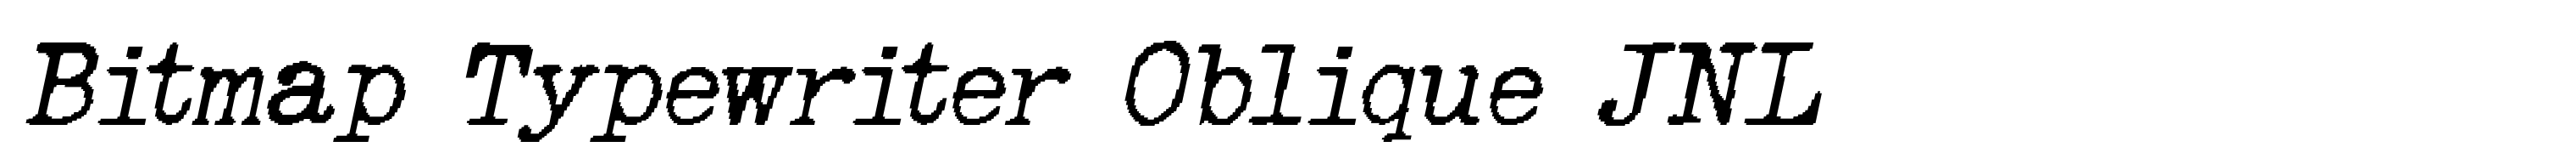 Bitmap Typewriter Oblique JNL